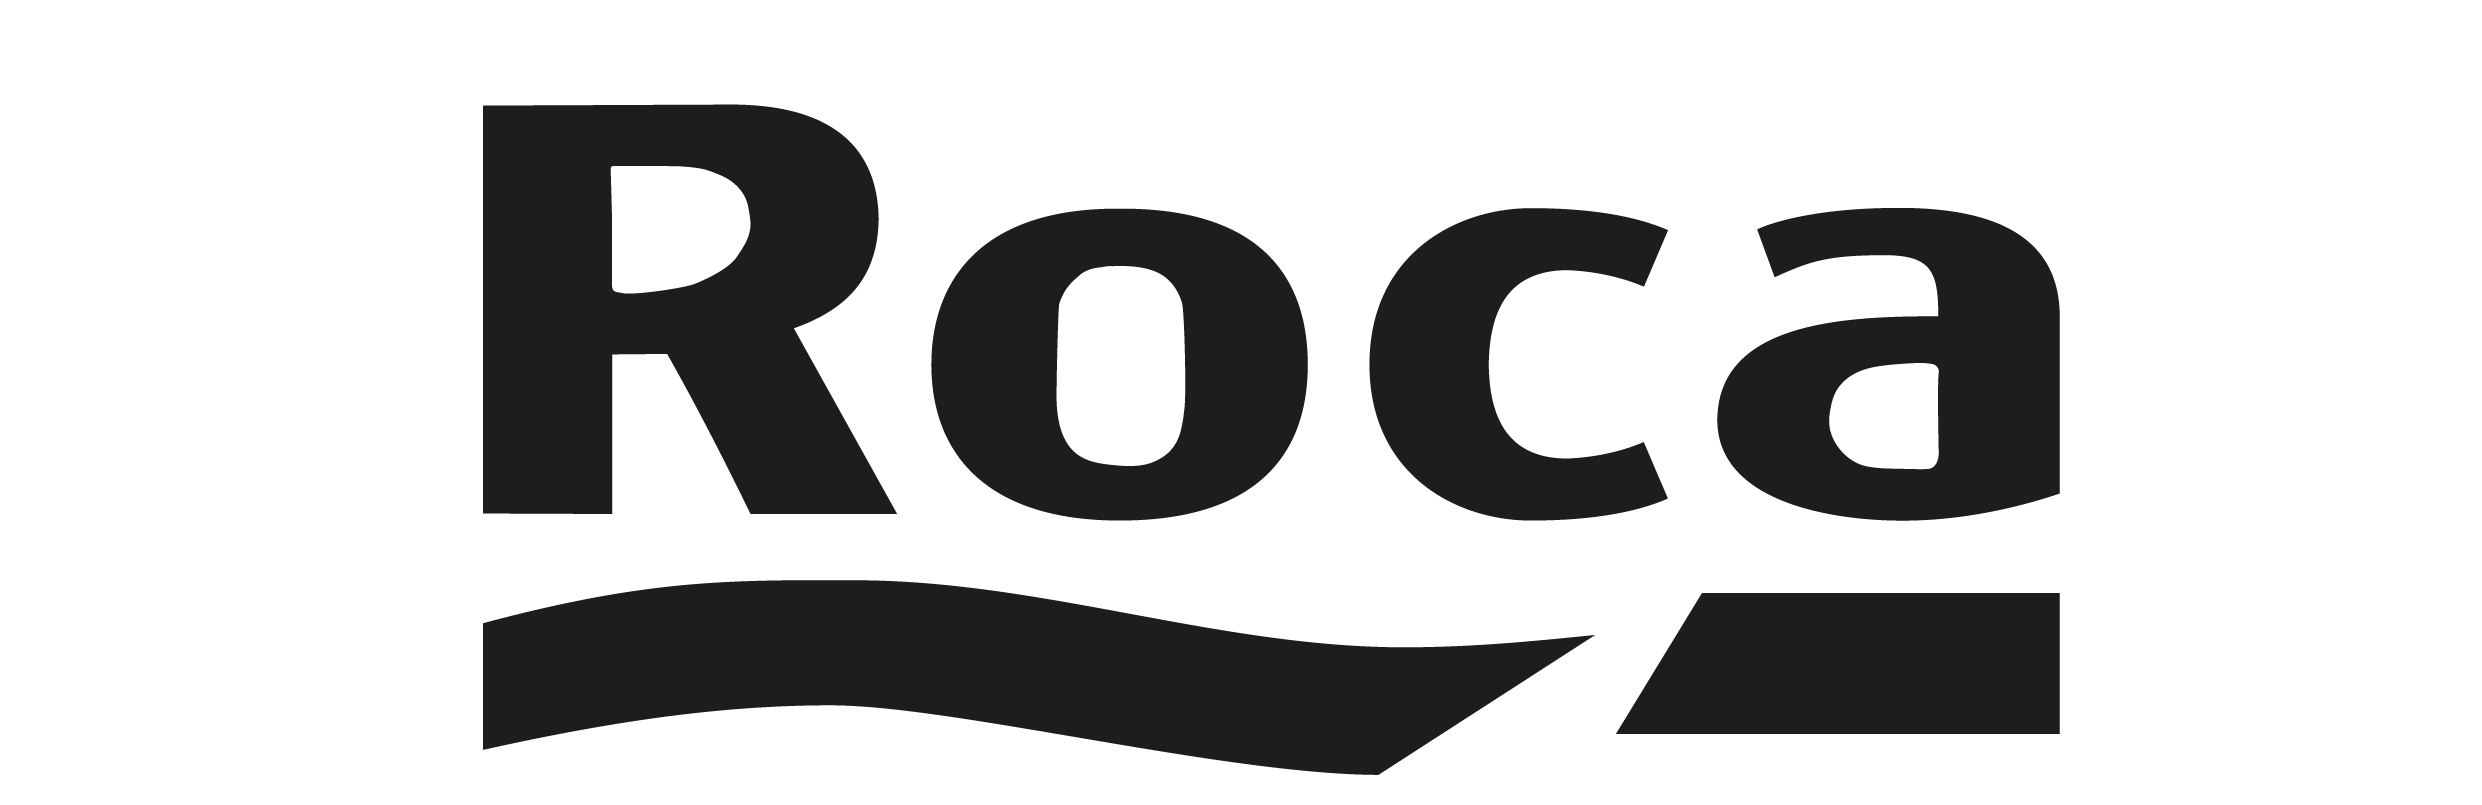 Roca_Logo_2_schwarz